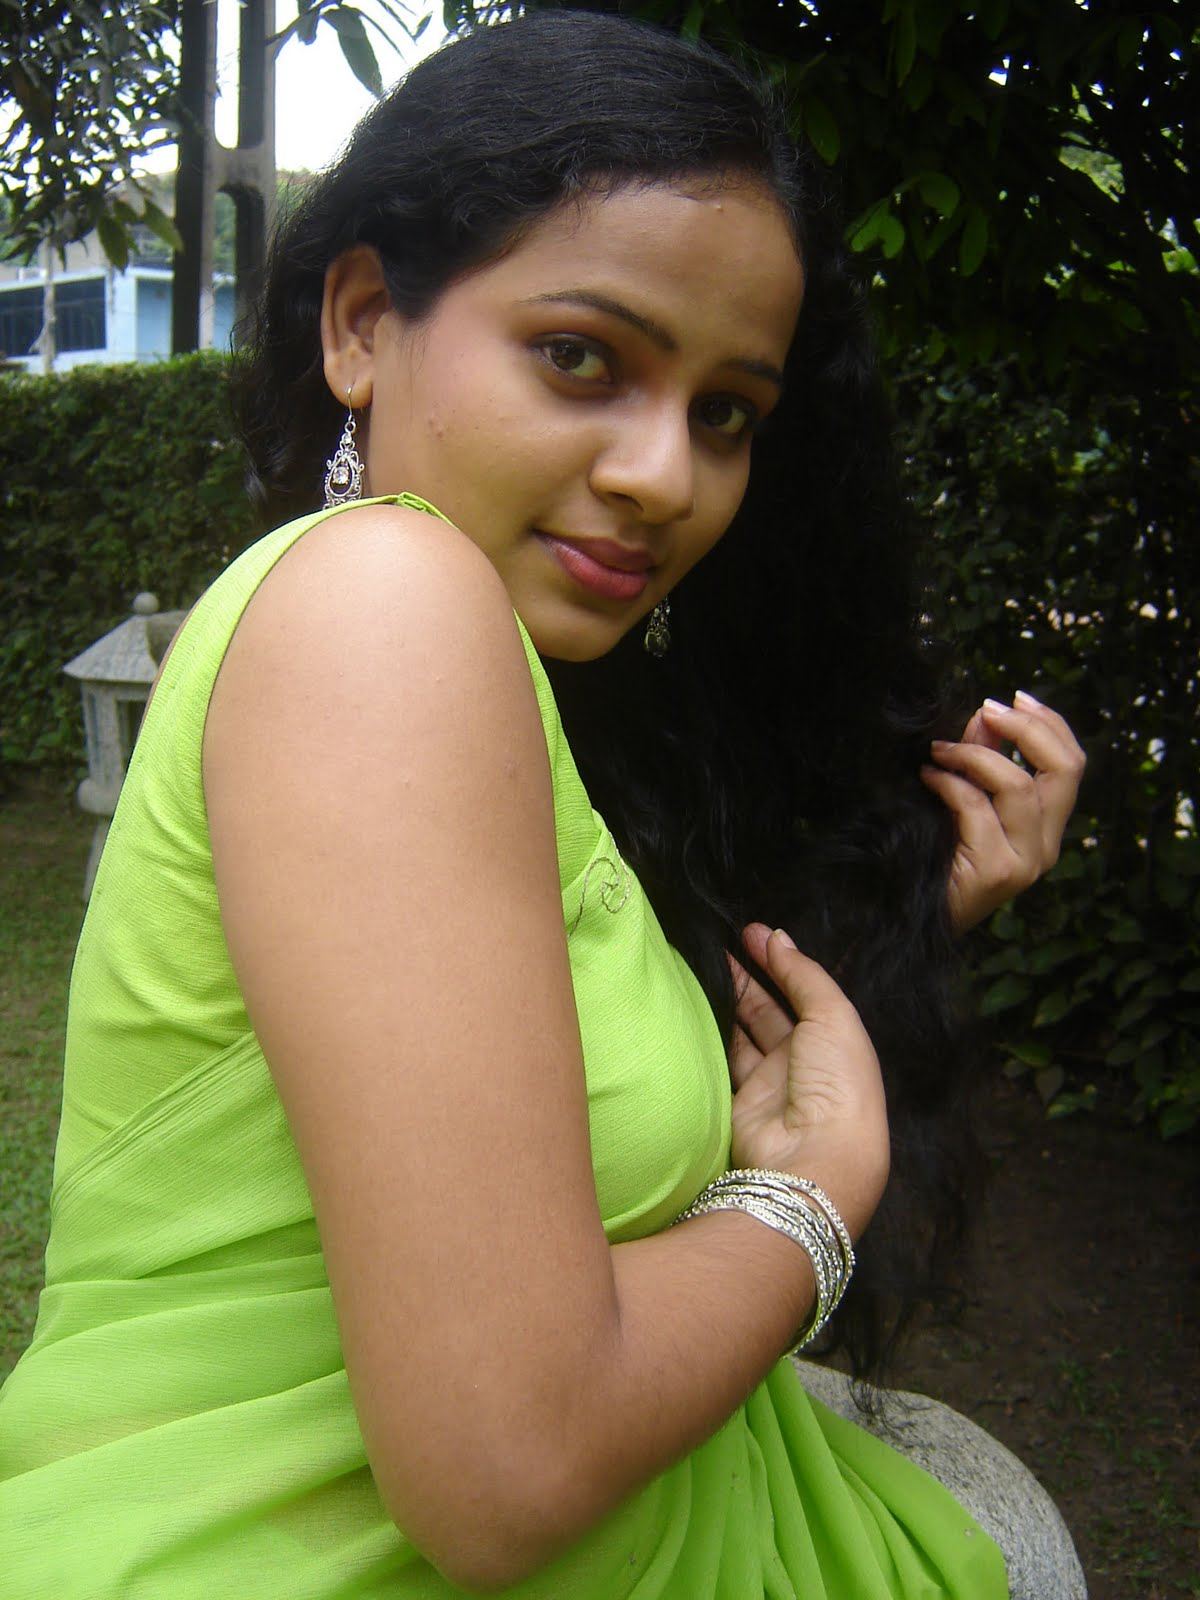 Srilankan girls lovely figure after